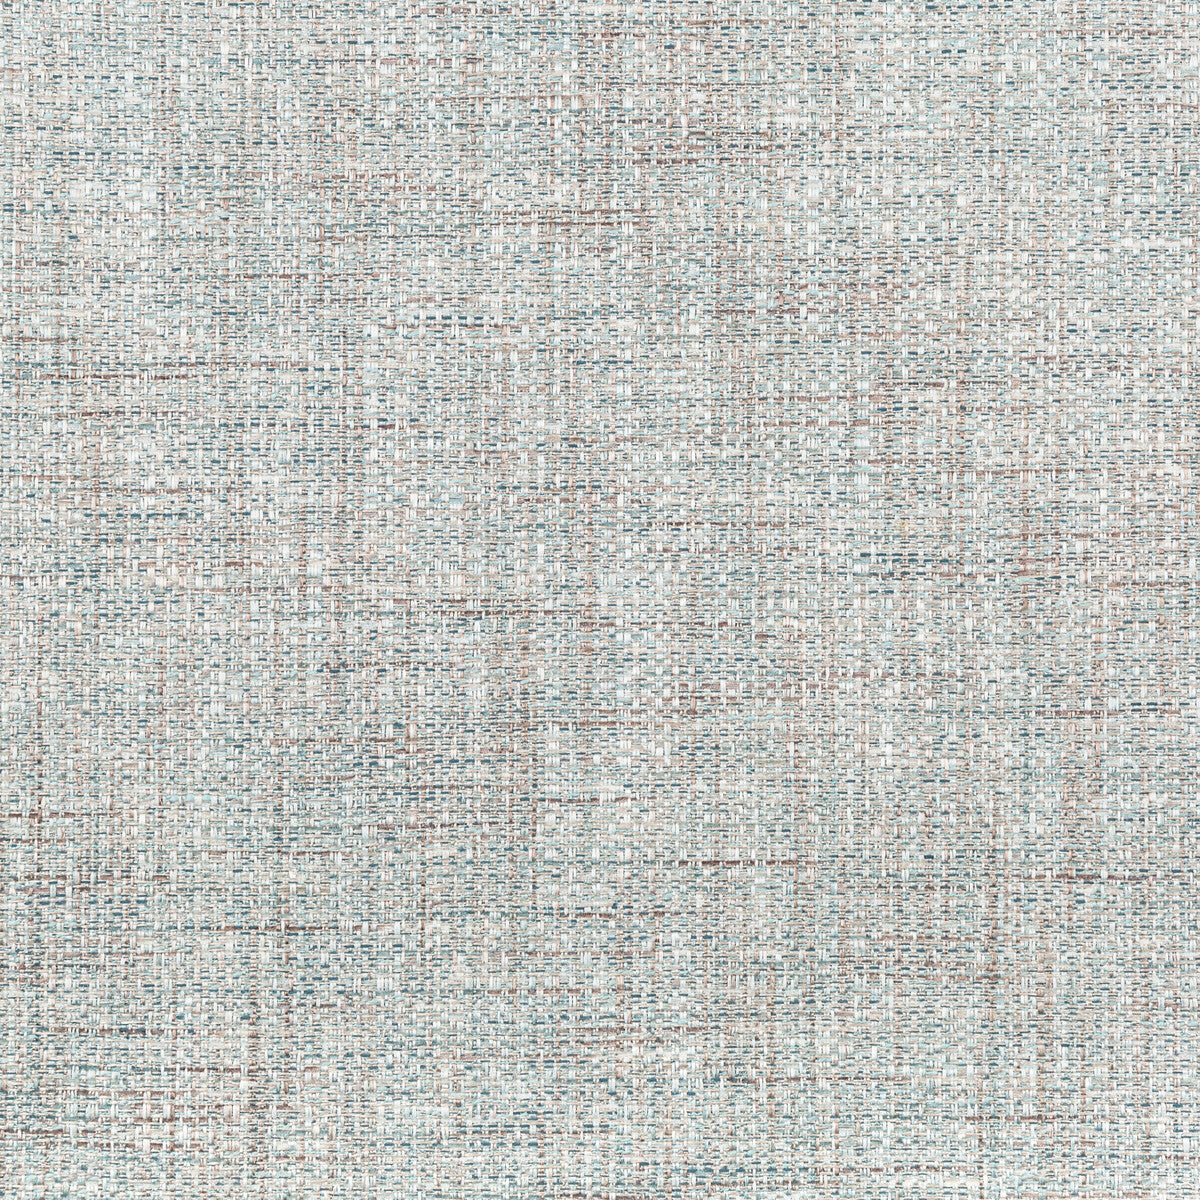 Kravet Smart fabric in 35929-115 color - pattern 35929.115.0 - by Kravet Smart in the Performance Kravetarmor collection